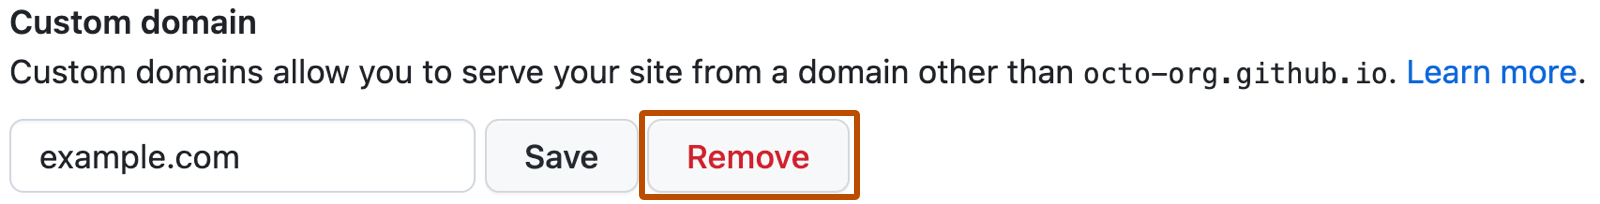 GitHub Pages에서 사용자 지정 도메인을 저장하거나 제거하는 설정 상자의 스크린샷. "example.com"을 읽는 텍스트 상자의 오른쪽에는 빨간색 형식의 "제거"라는 레이블이 지정된 버튼이 있습니다.